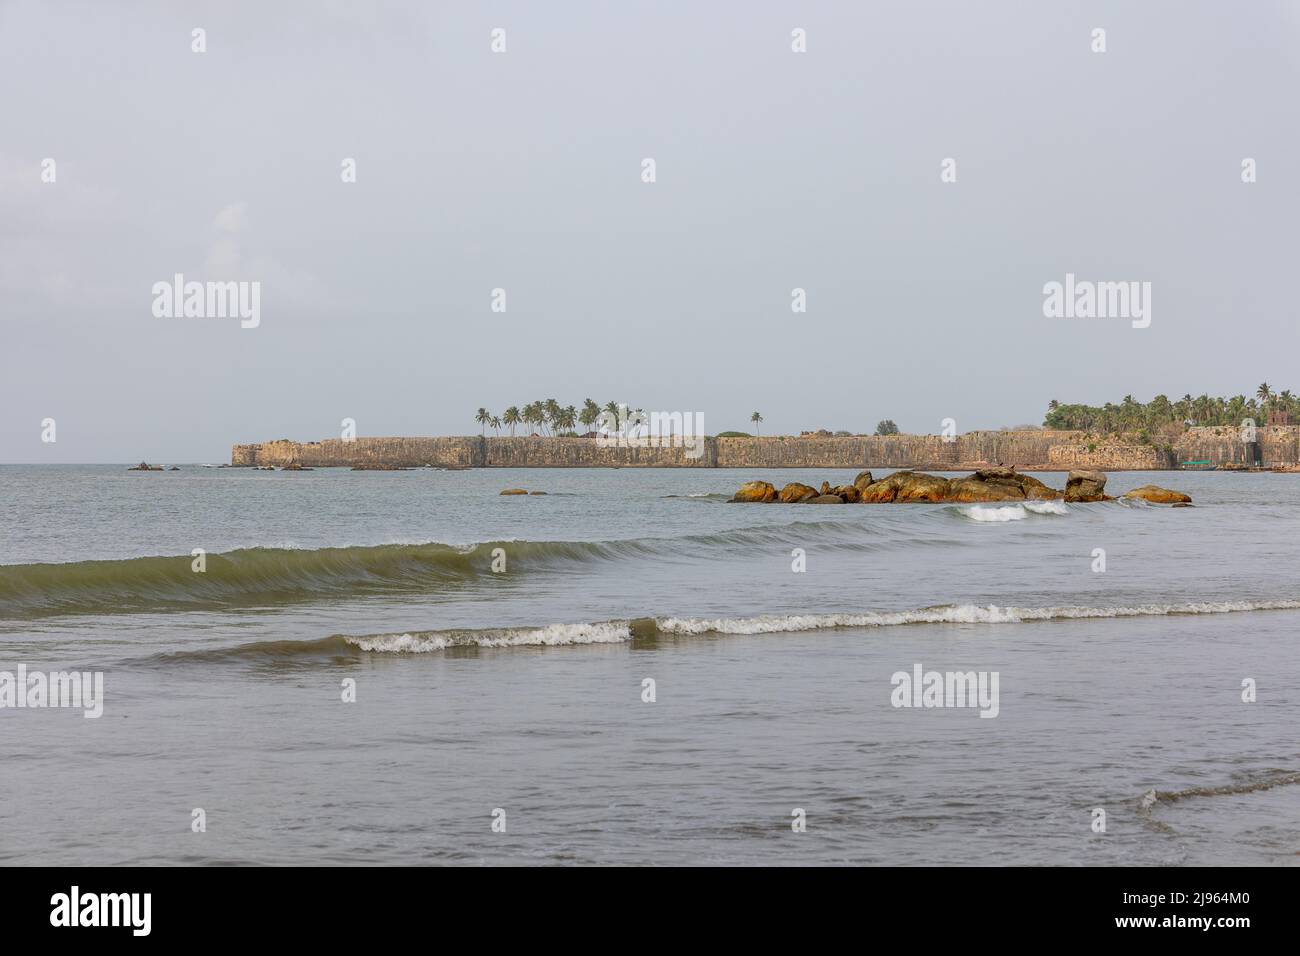 View of the massive Sindhudurg Fort stretching into the Arabian Sea as seen from Wayari Bhutnath Beach, Malvan, Maharashtra, India Stock Photo